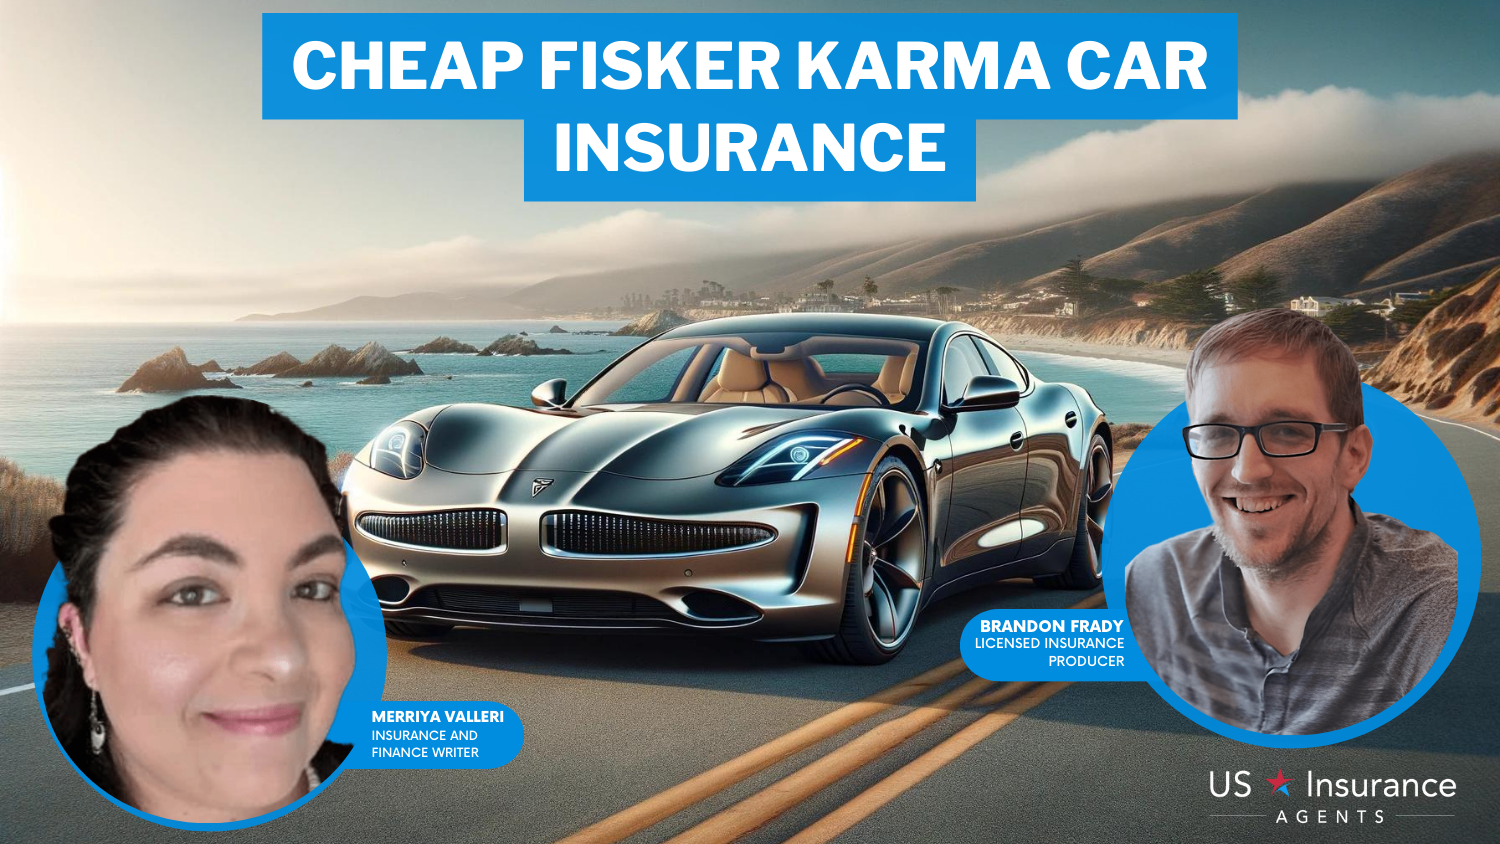 Cheap Fisker Karma Car Insurance: Farmers, Erie, and AAA